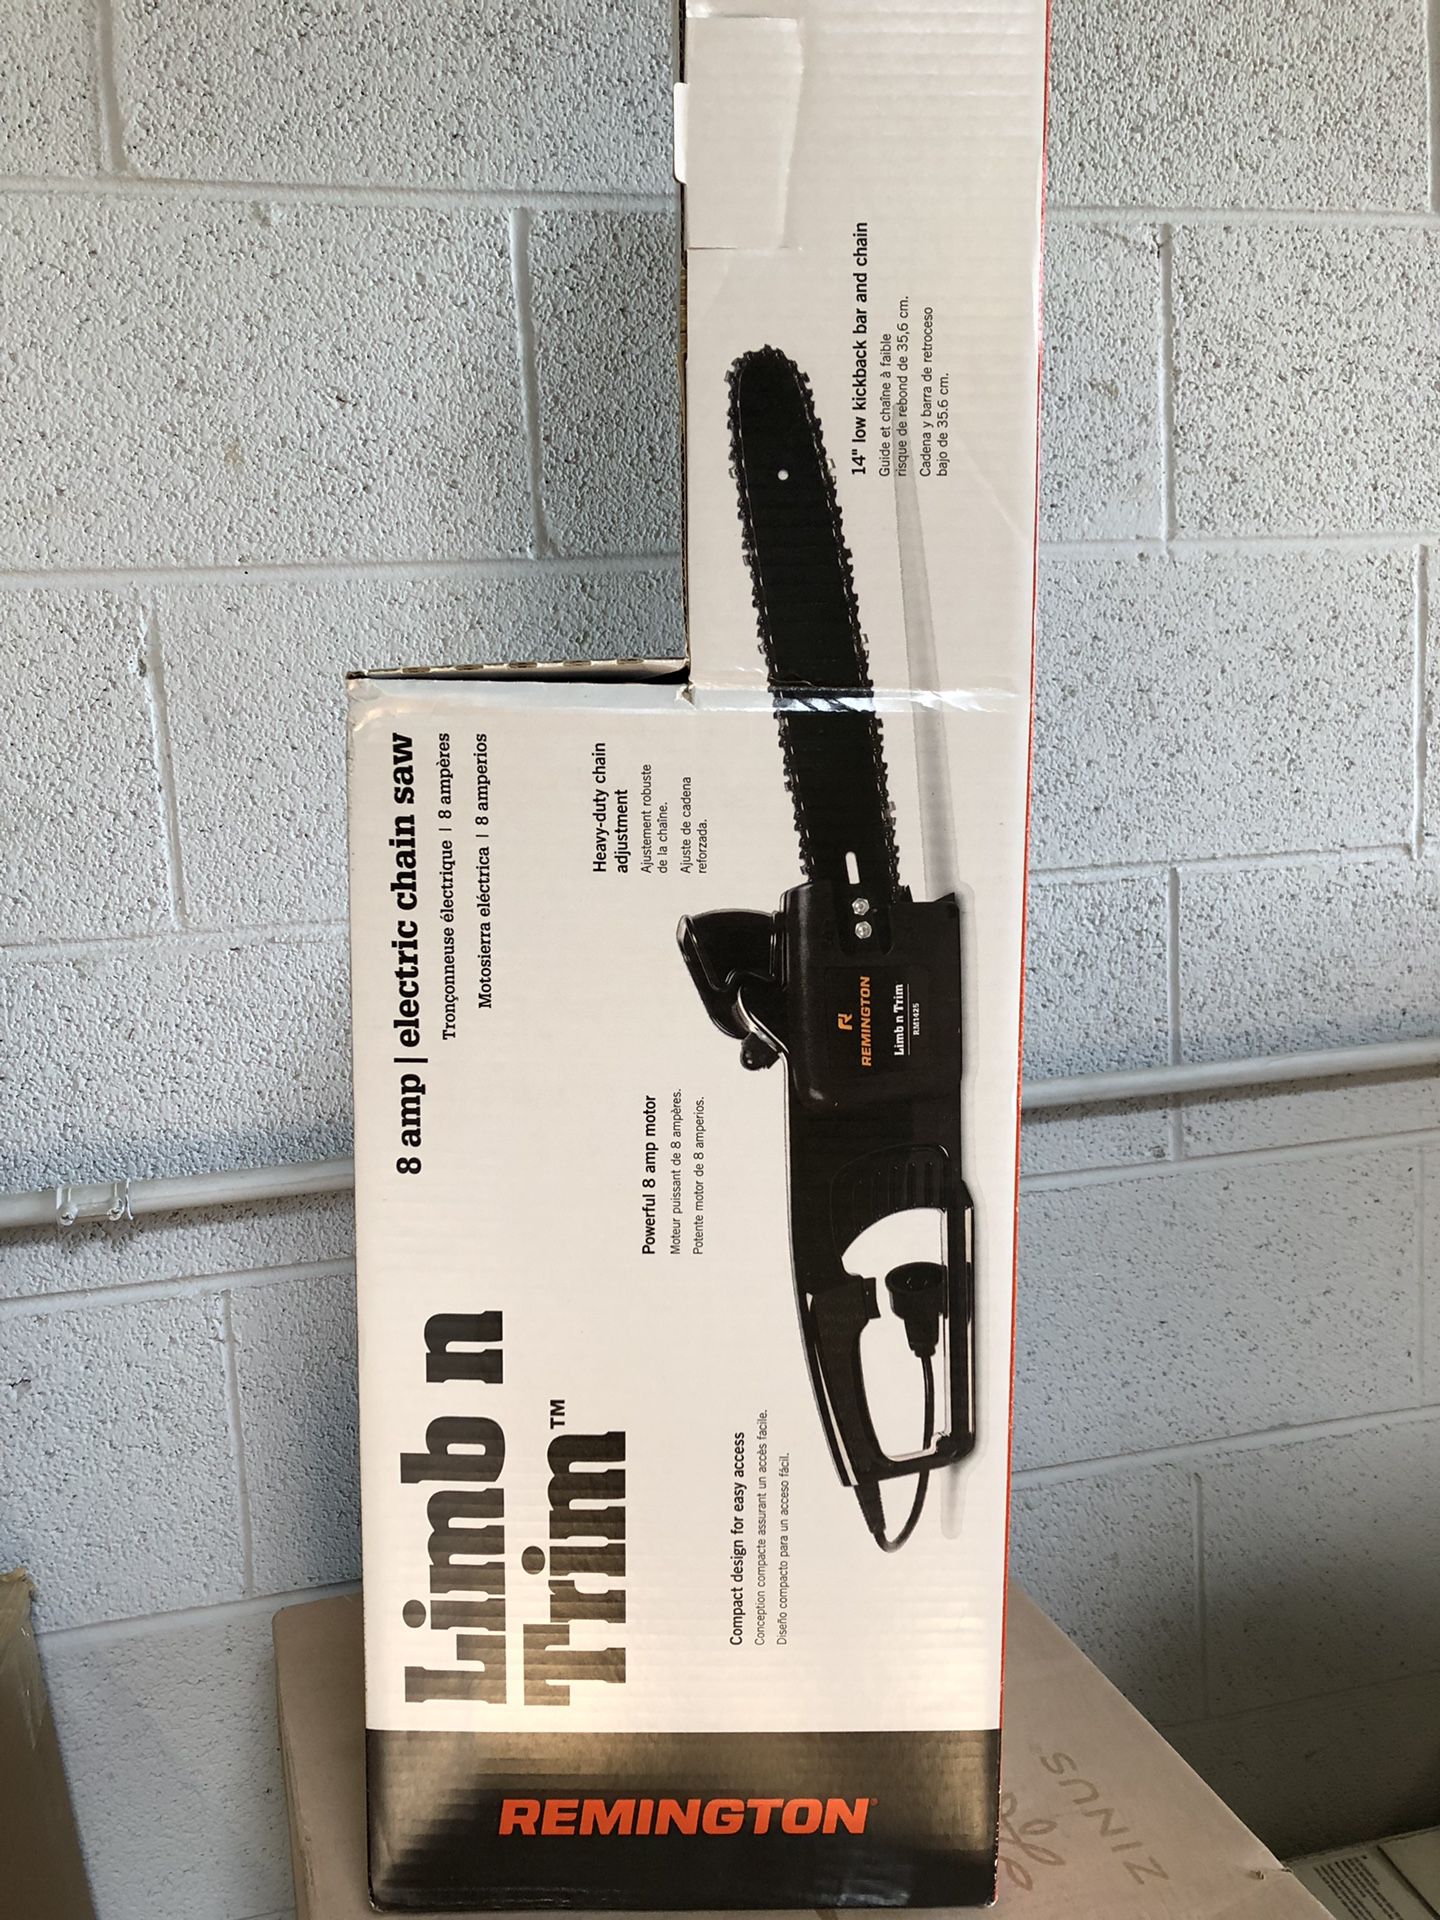 Remington Limb n trim 8 amp electric chainsaw